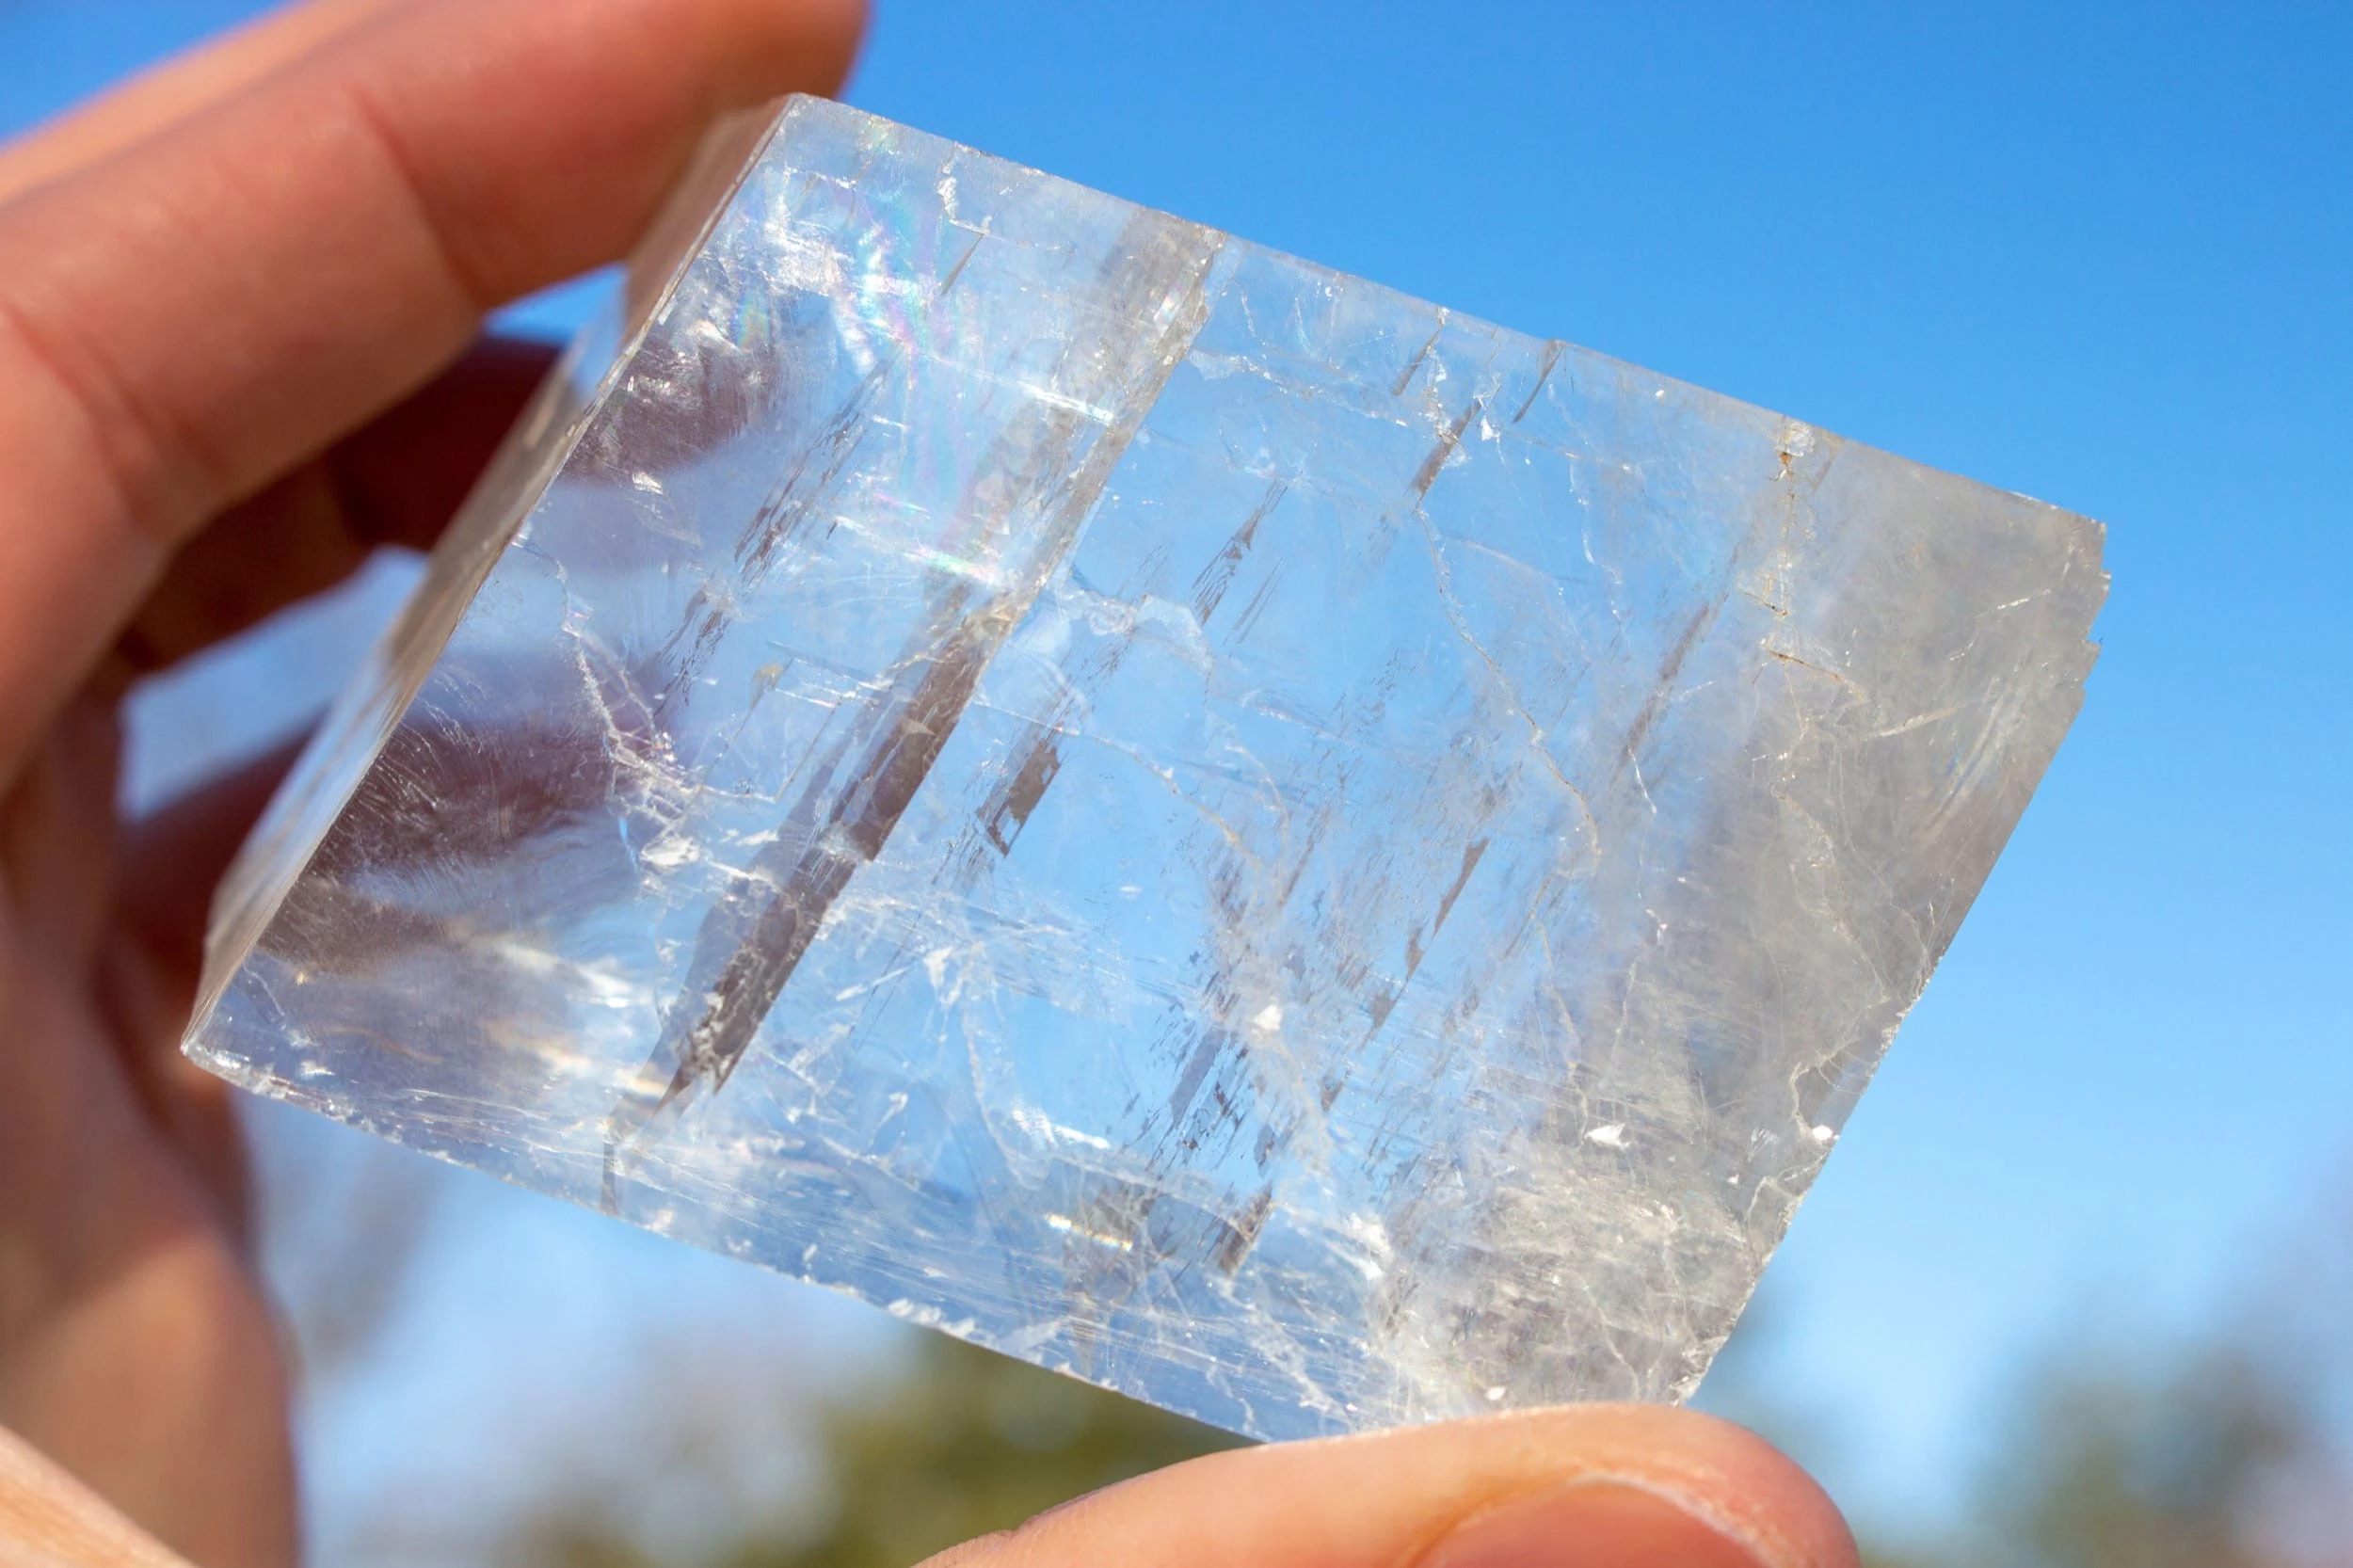 Iceland Spar (Clear Calcite)